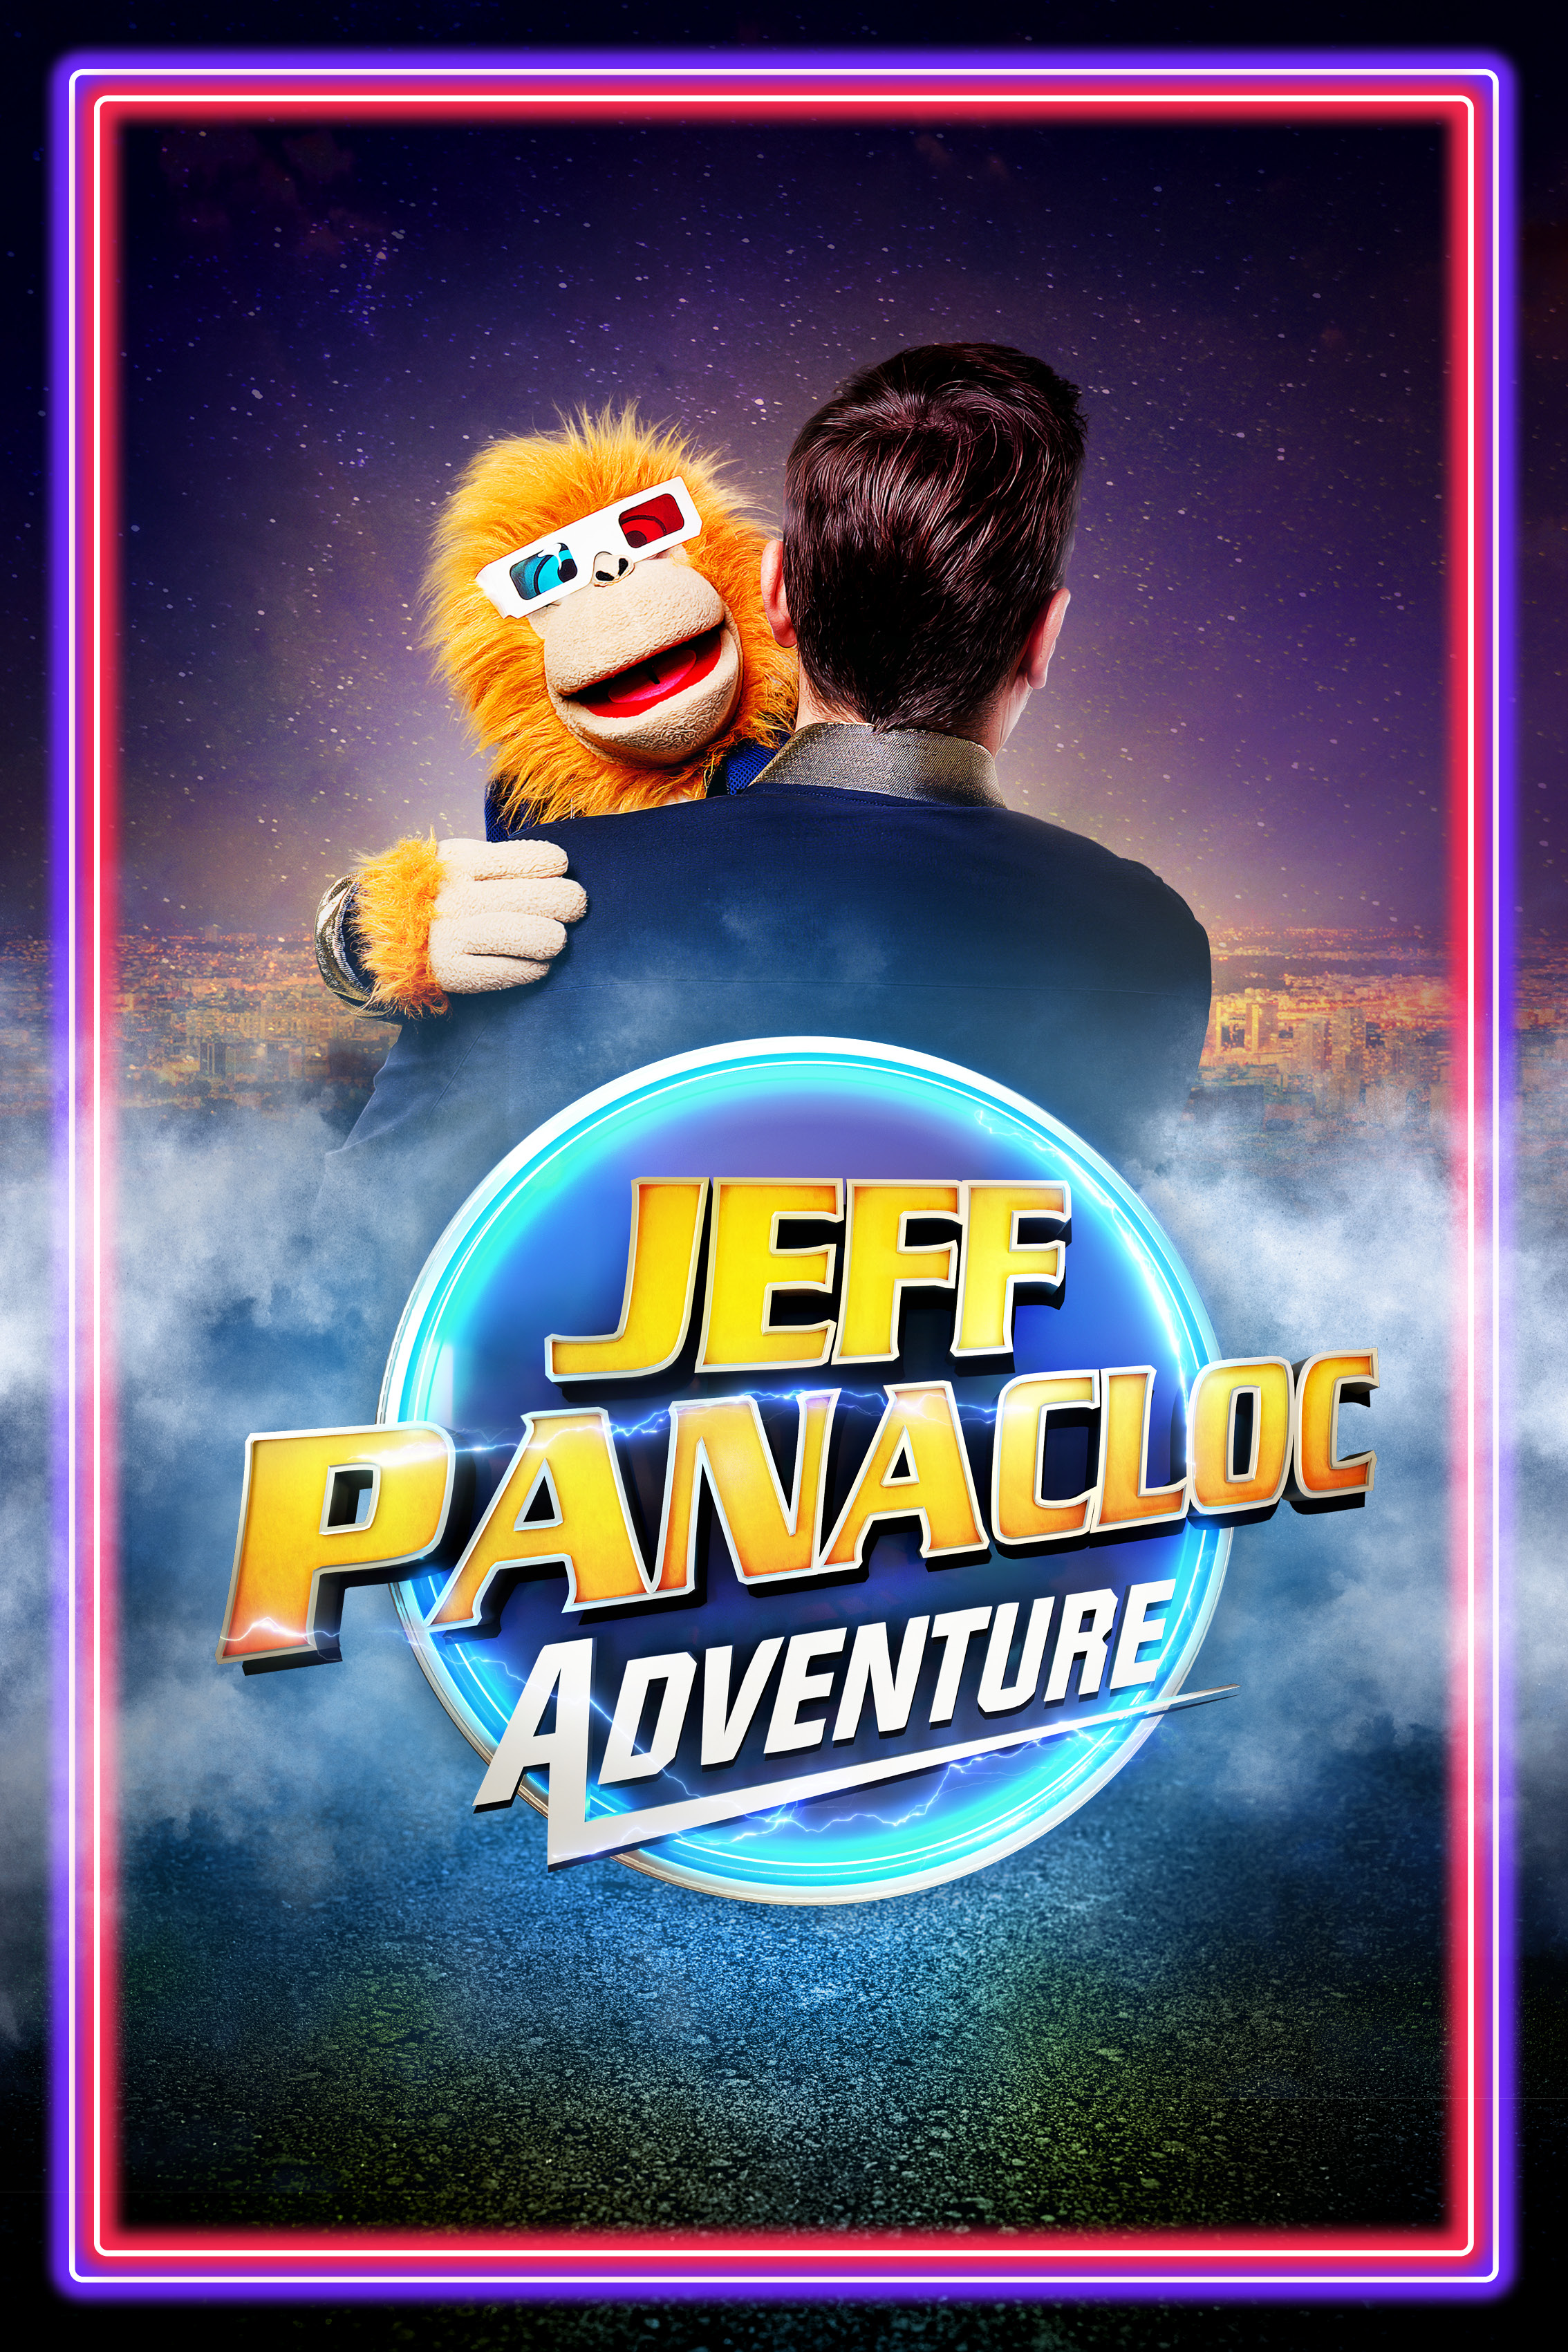 Jeff Panacloc - Adventure_TOURNEE